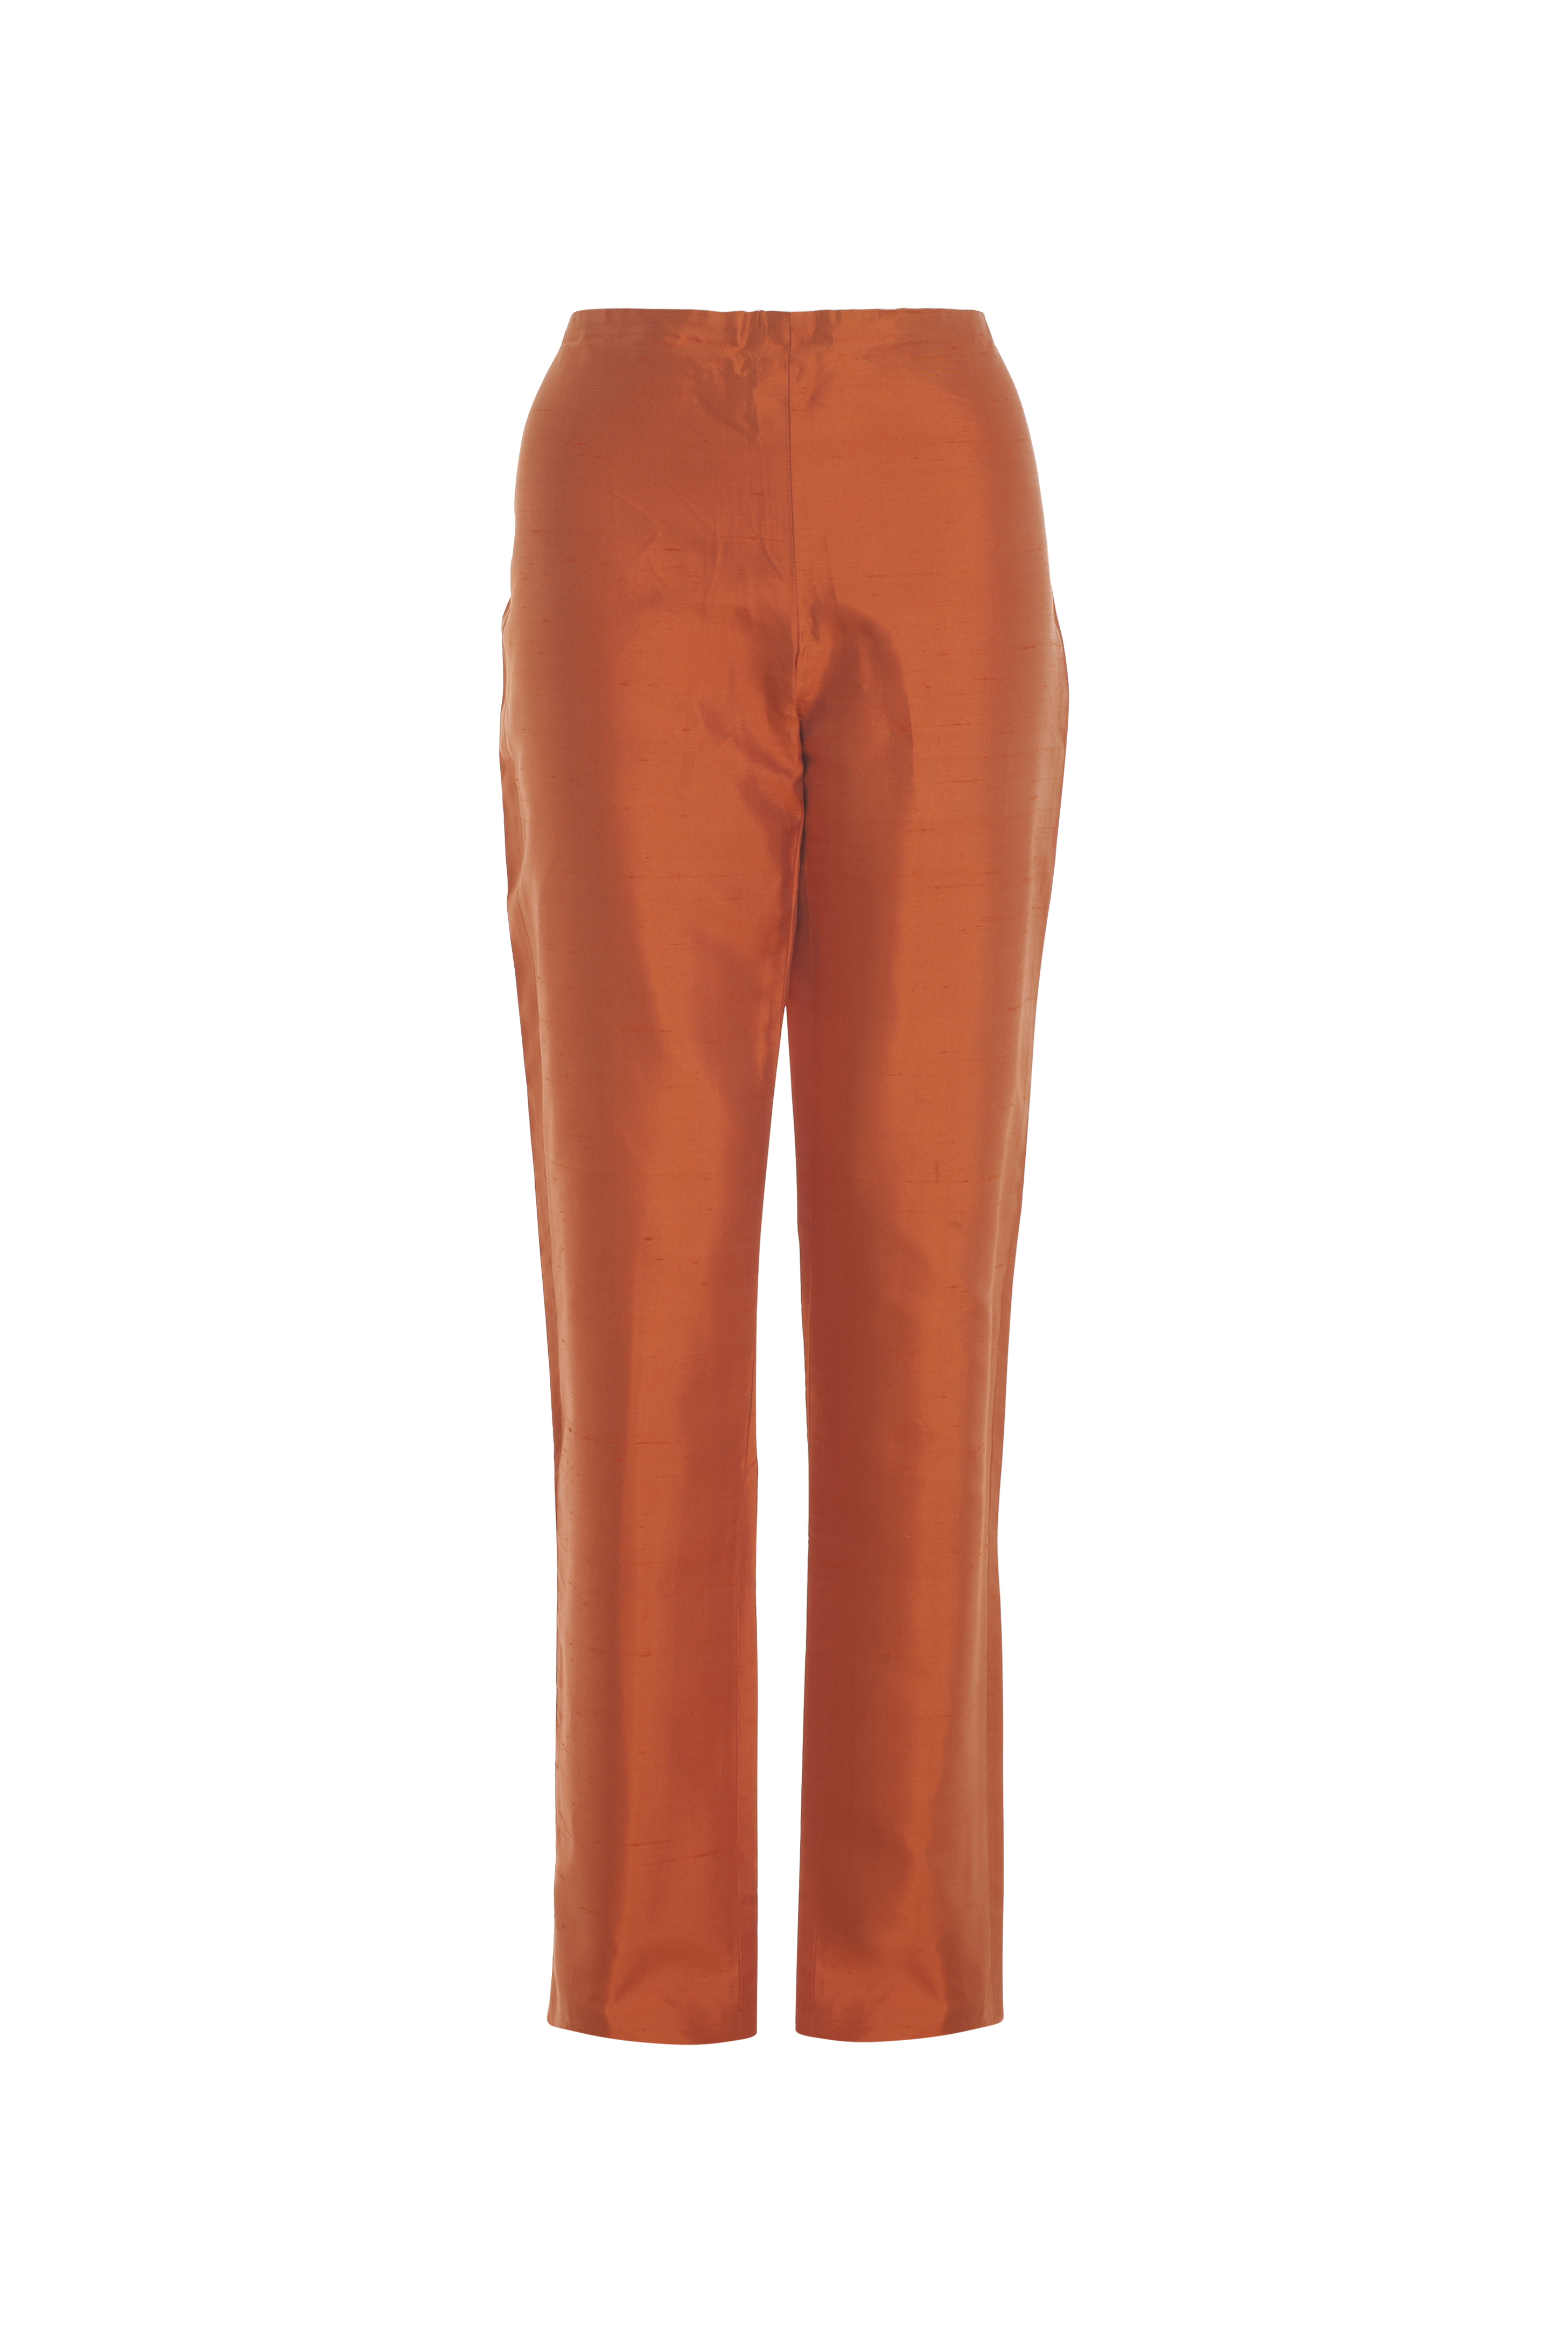 Ralph Lauren orange silk trousers